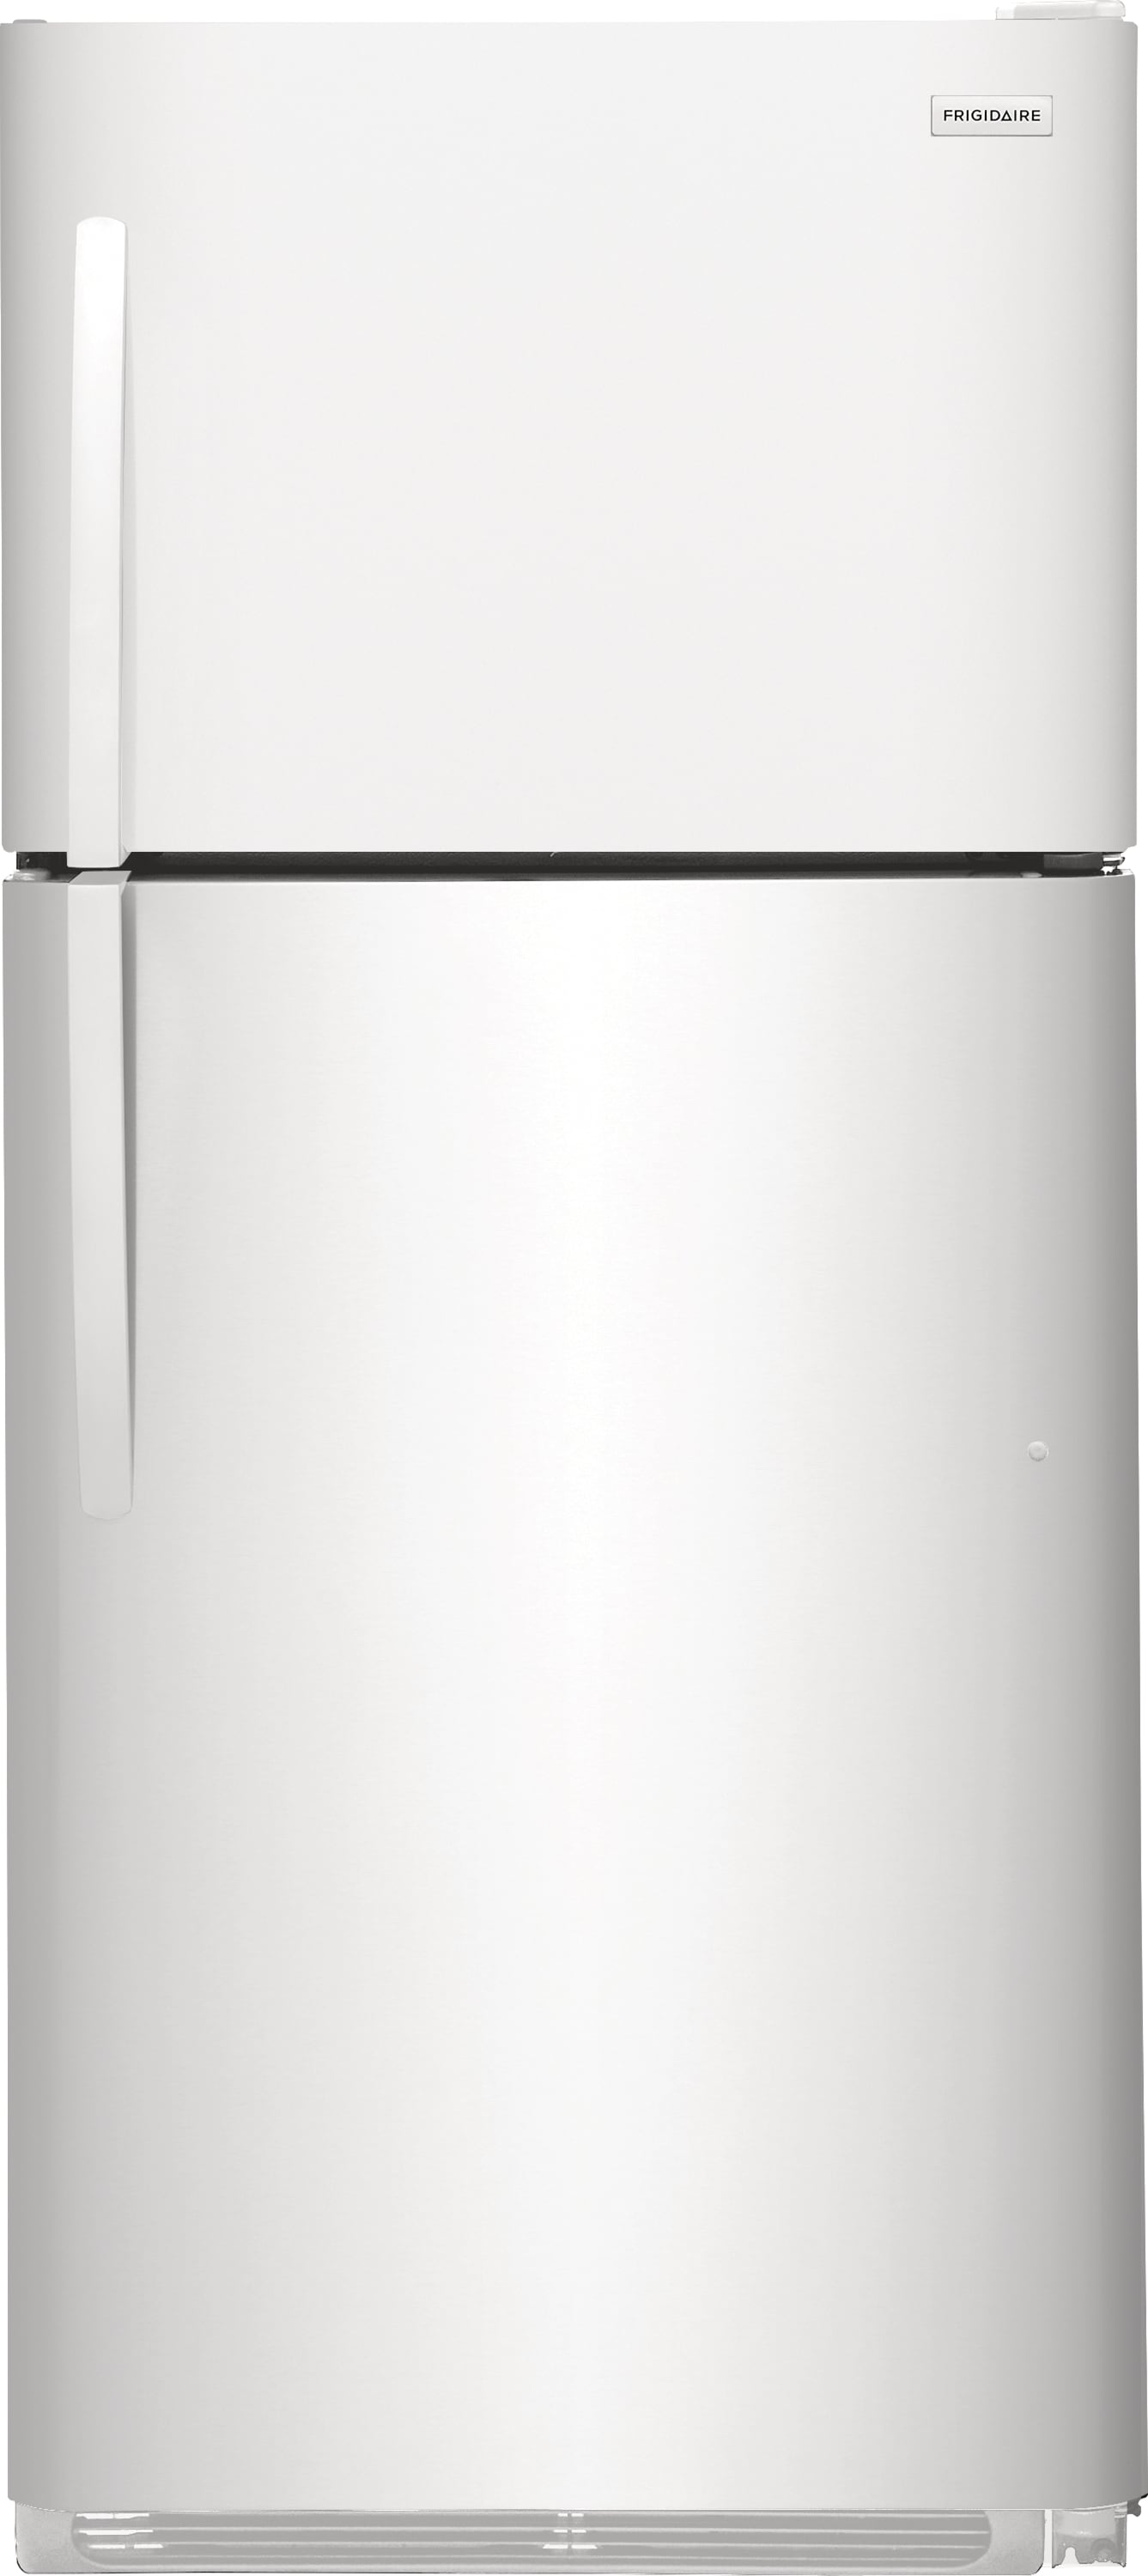 LG 20.2-cu ft Top-Freezer Refrigerator (White) ENERGY STAR in the  Top-Freezer Refrigerators department at